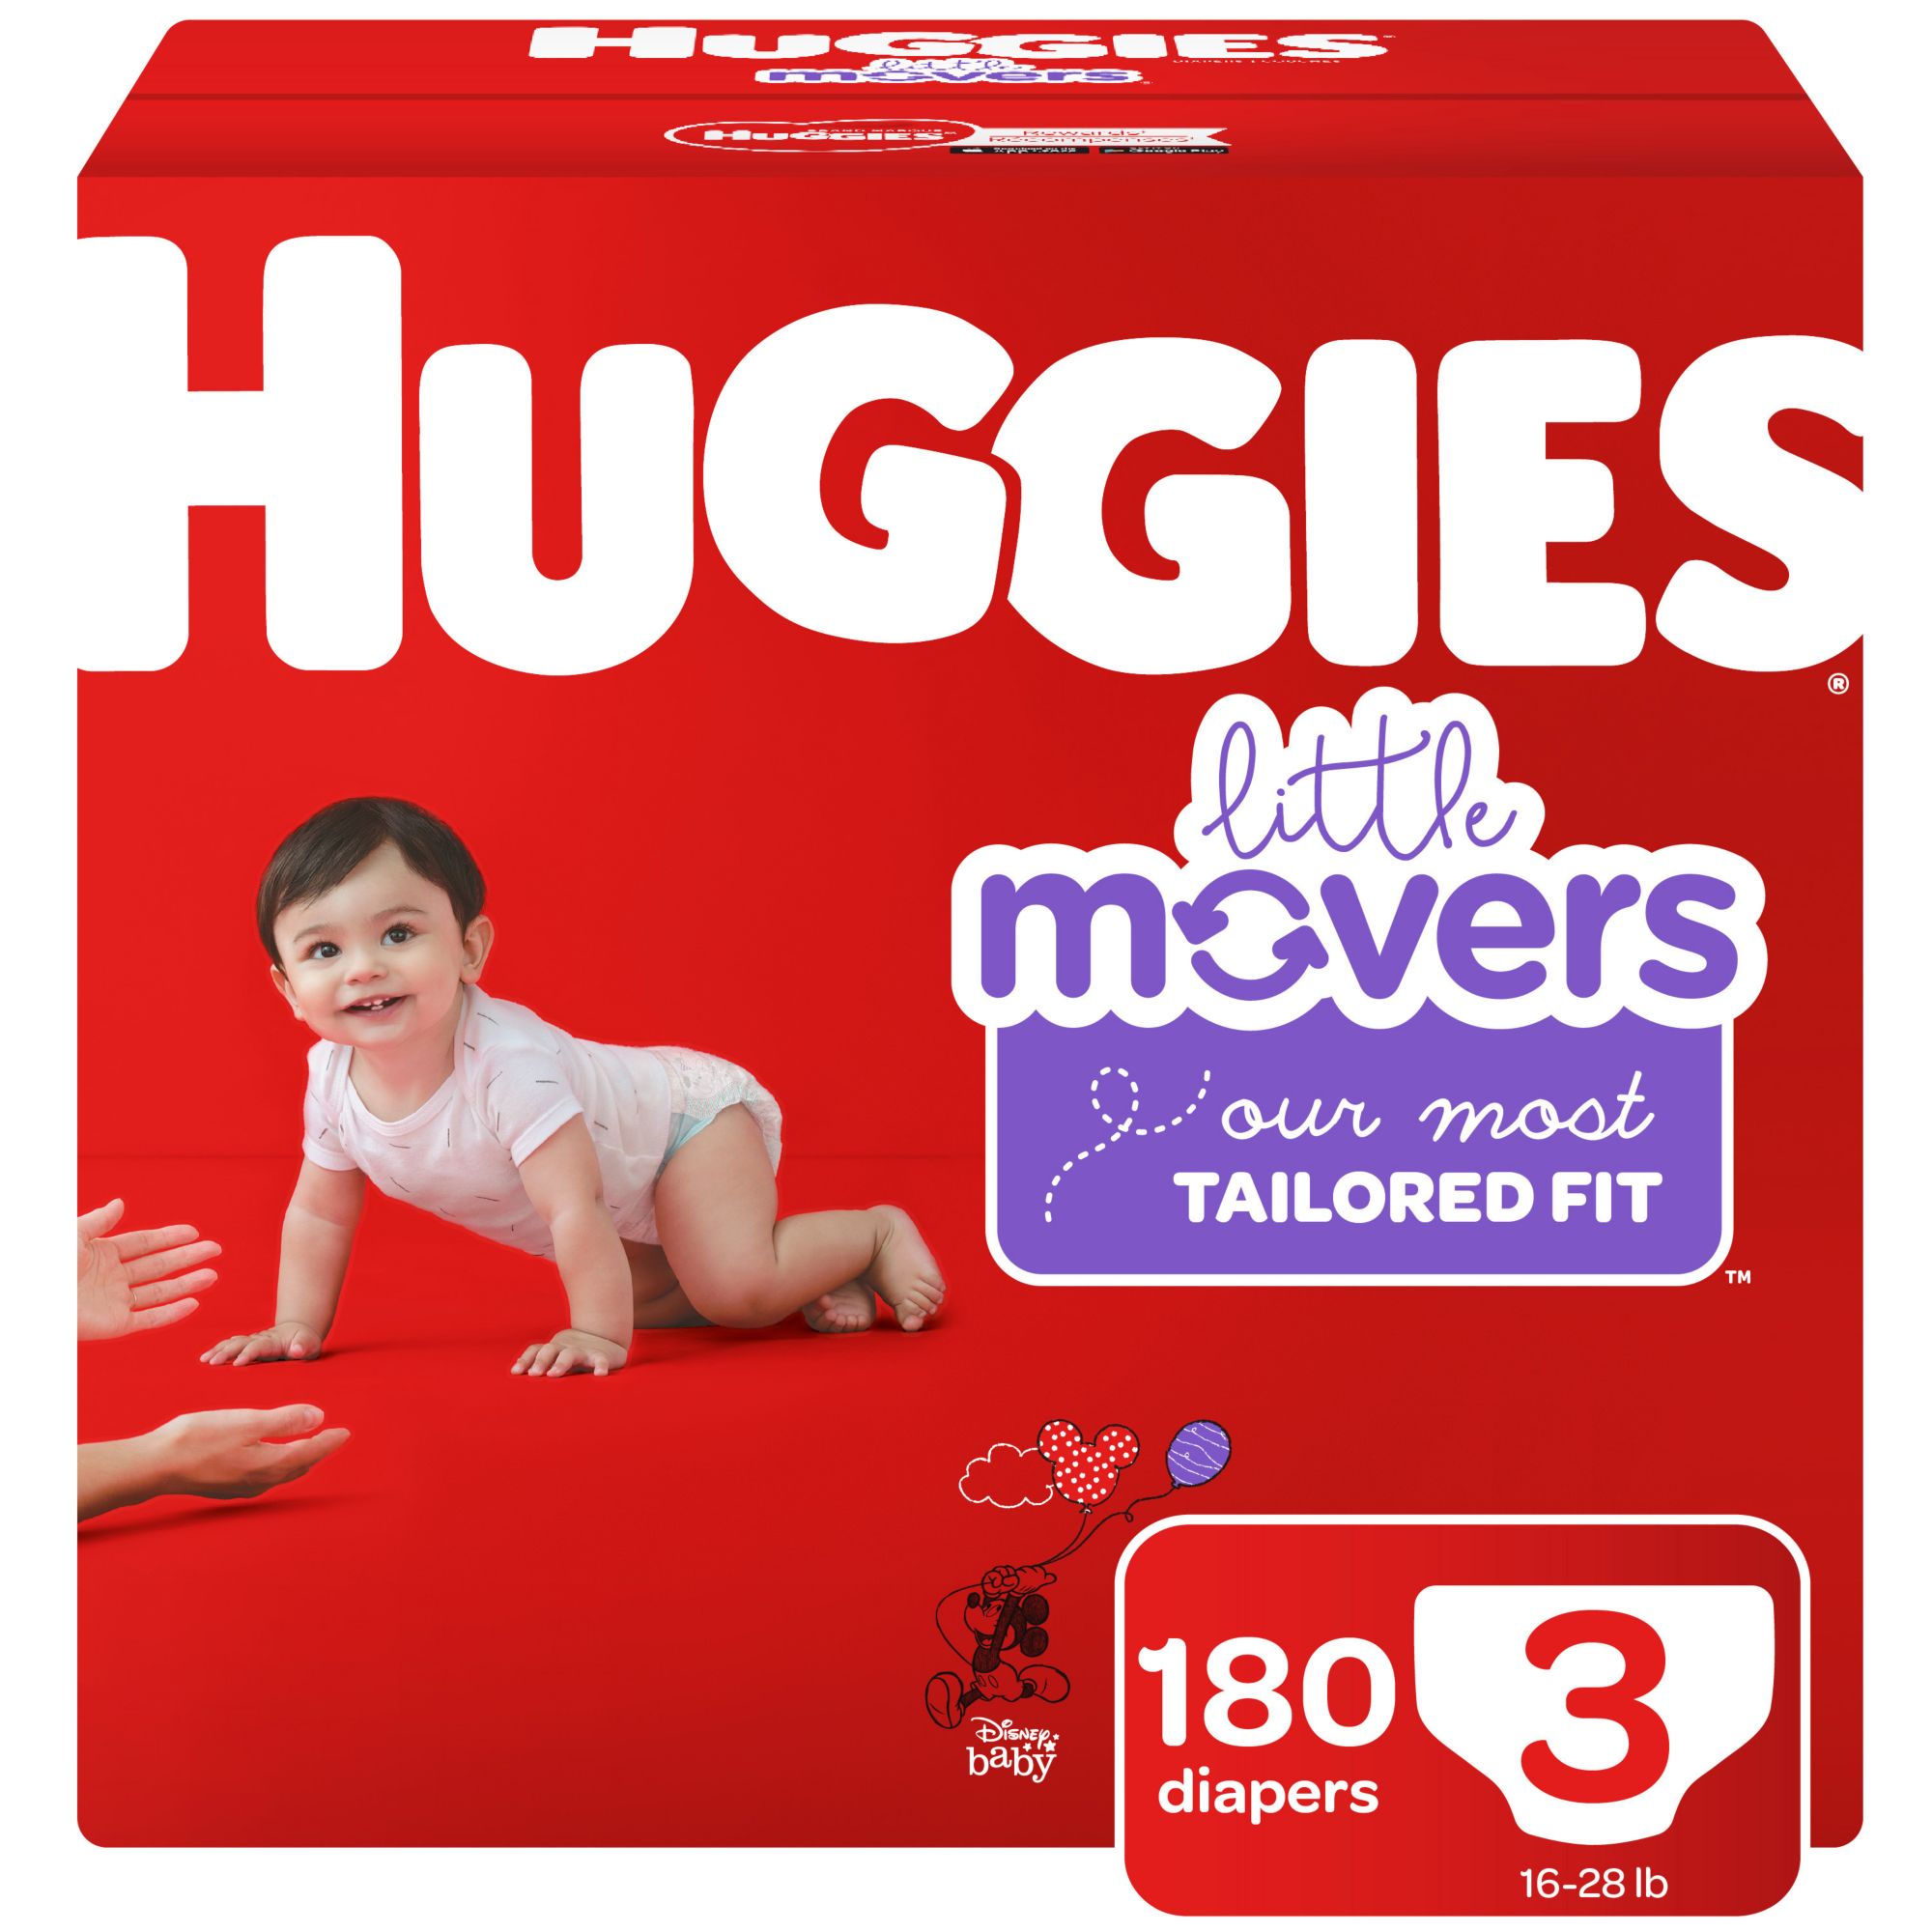 Huggies Little Movers Diapers - BJs 